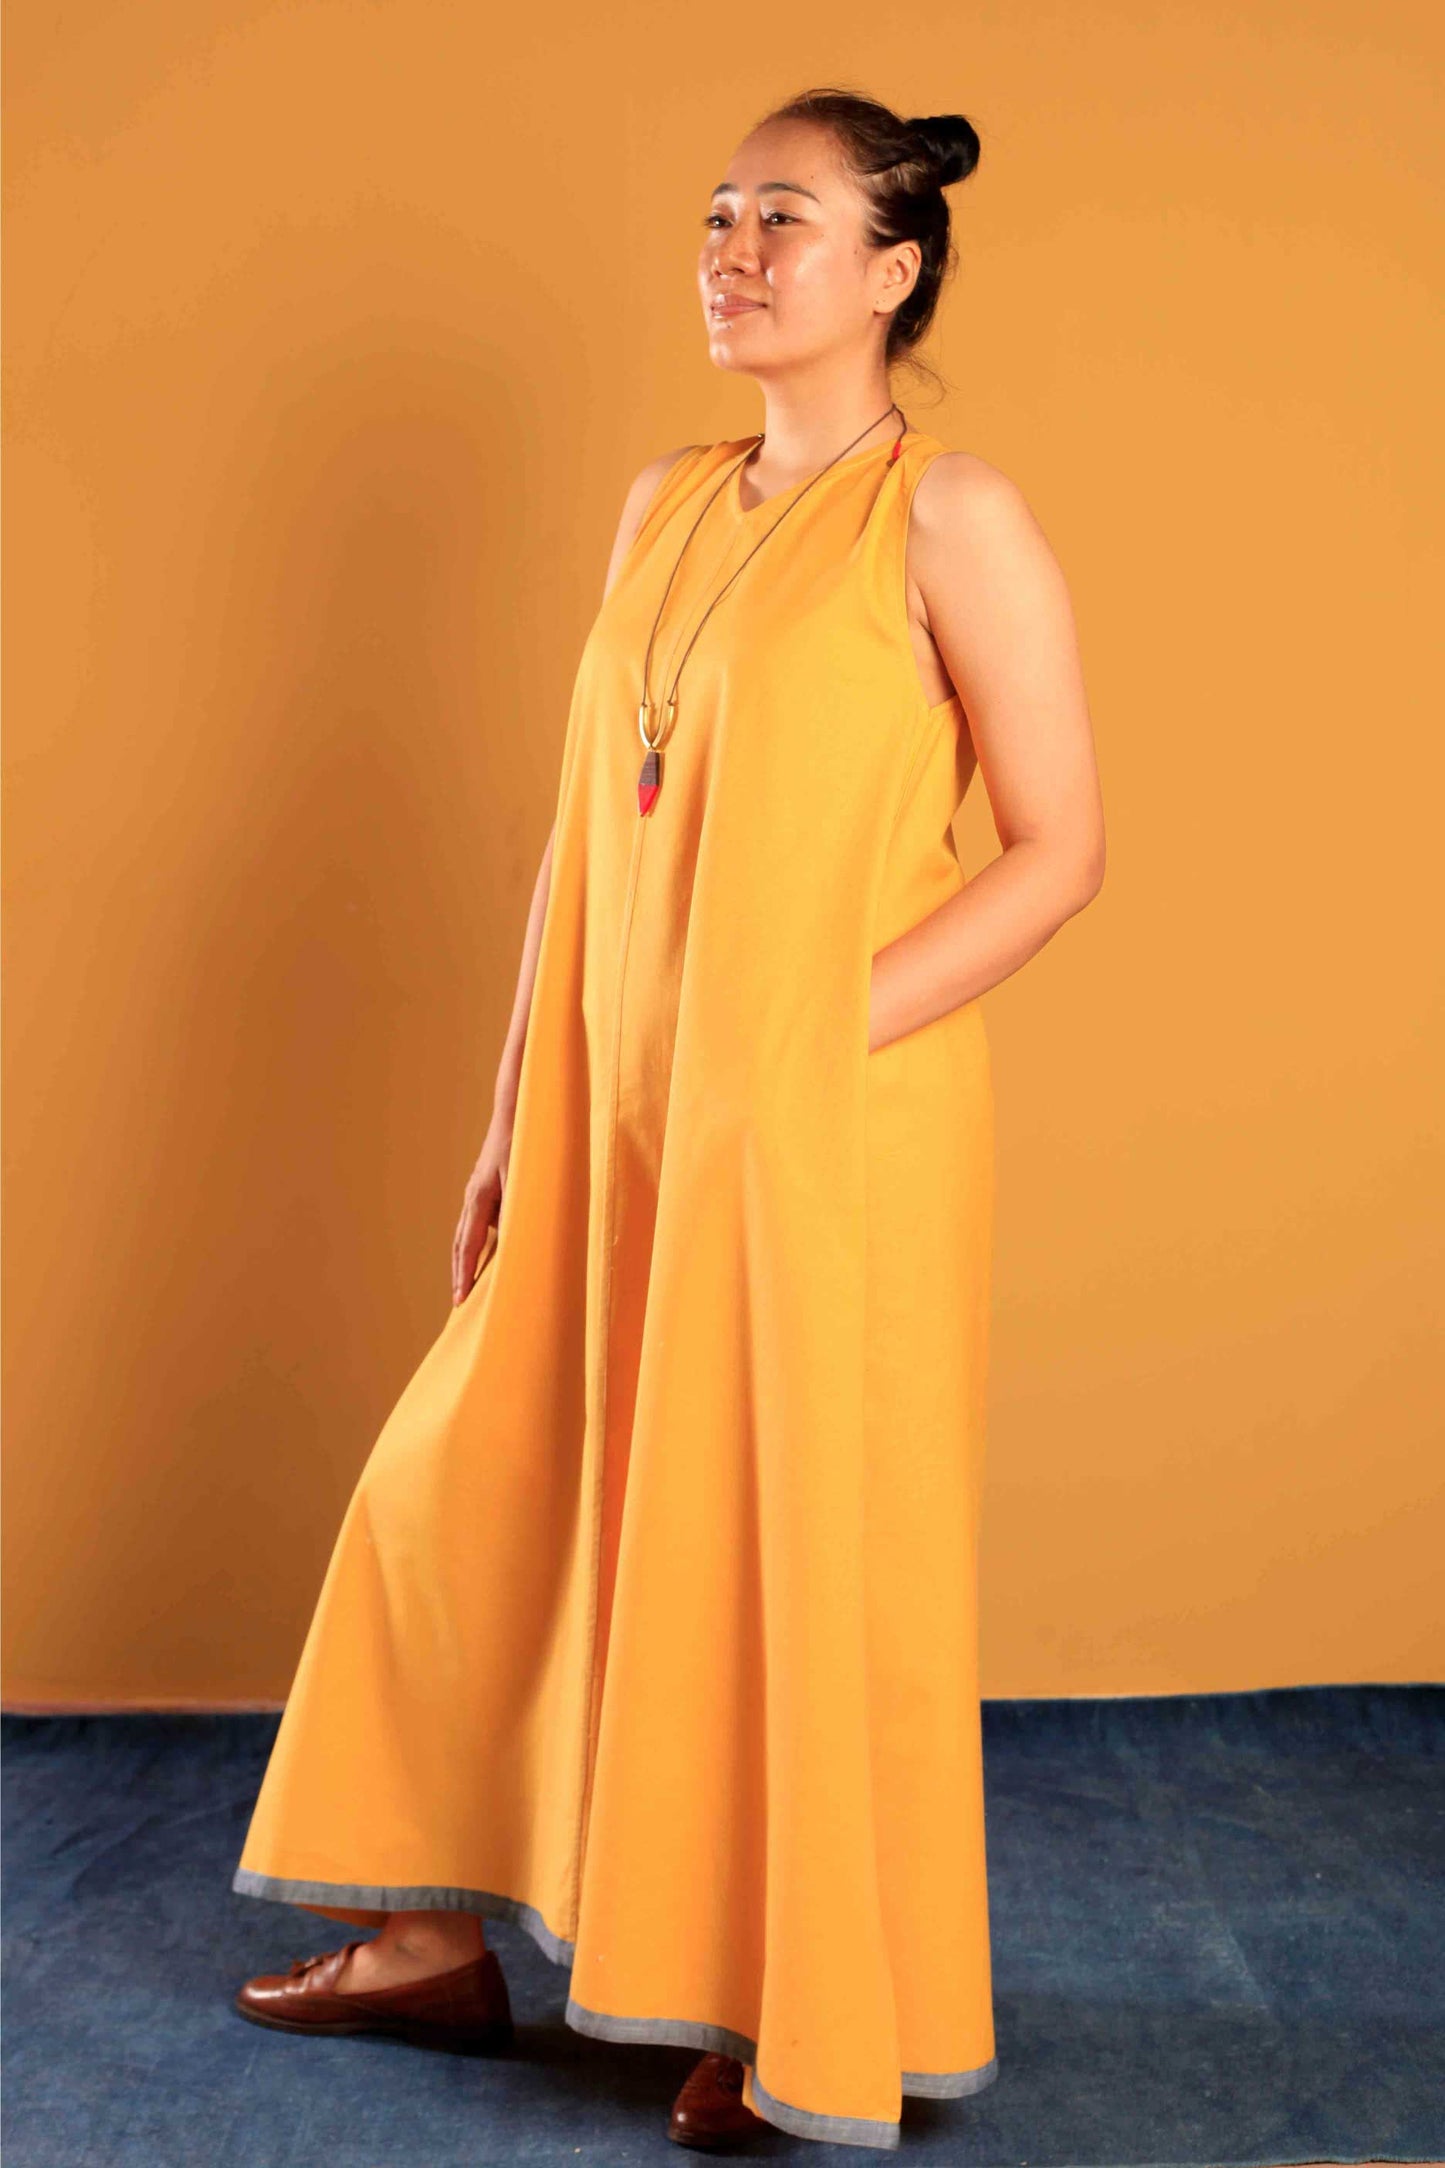 The Marigold Dress